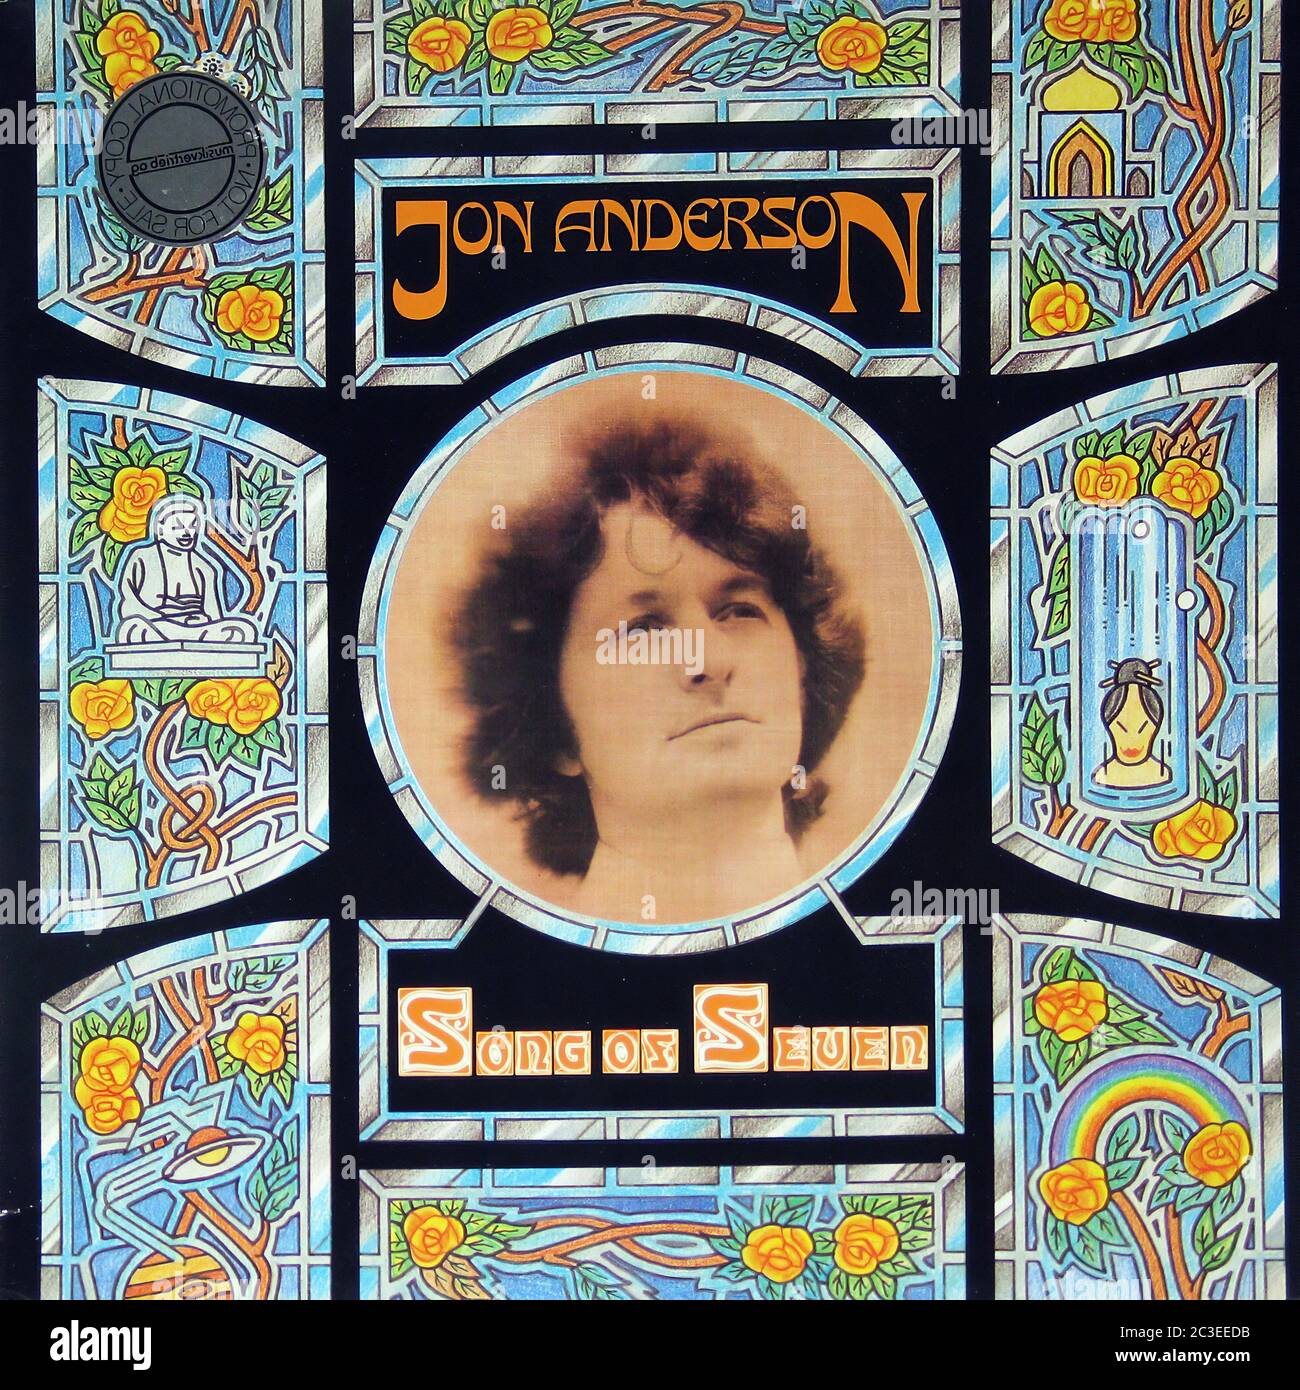 Jon Anderson Song of Seven  - Vintage 12'' vinyl LP Cover Stock Photo